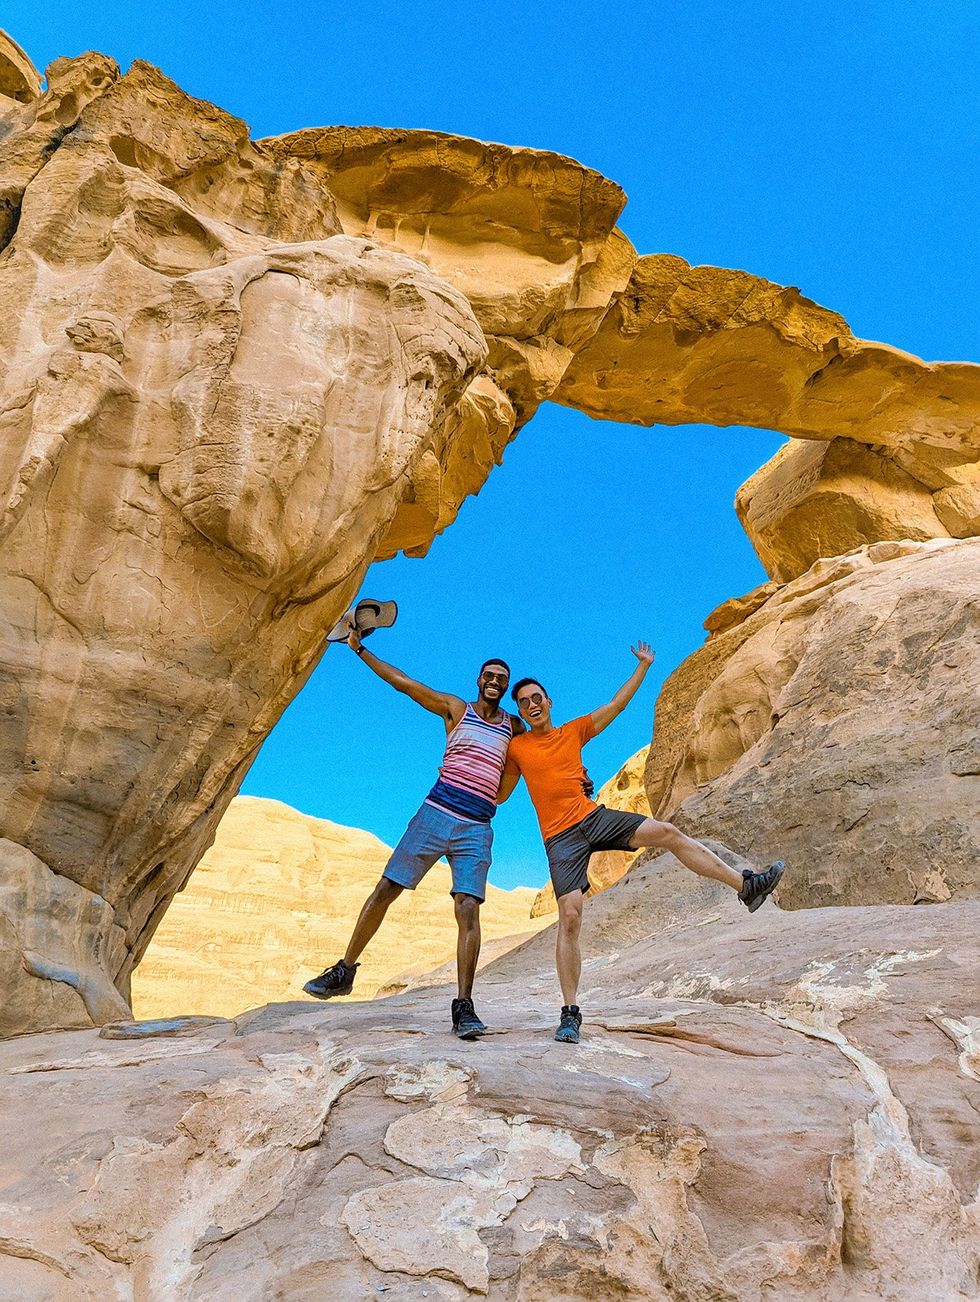 Barry Hoy's LGBTQ+ Syrian Adventure - Barry and Teraj at the Burdah Rock Bridge in the Wadi Rum